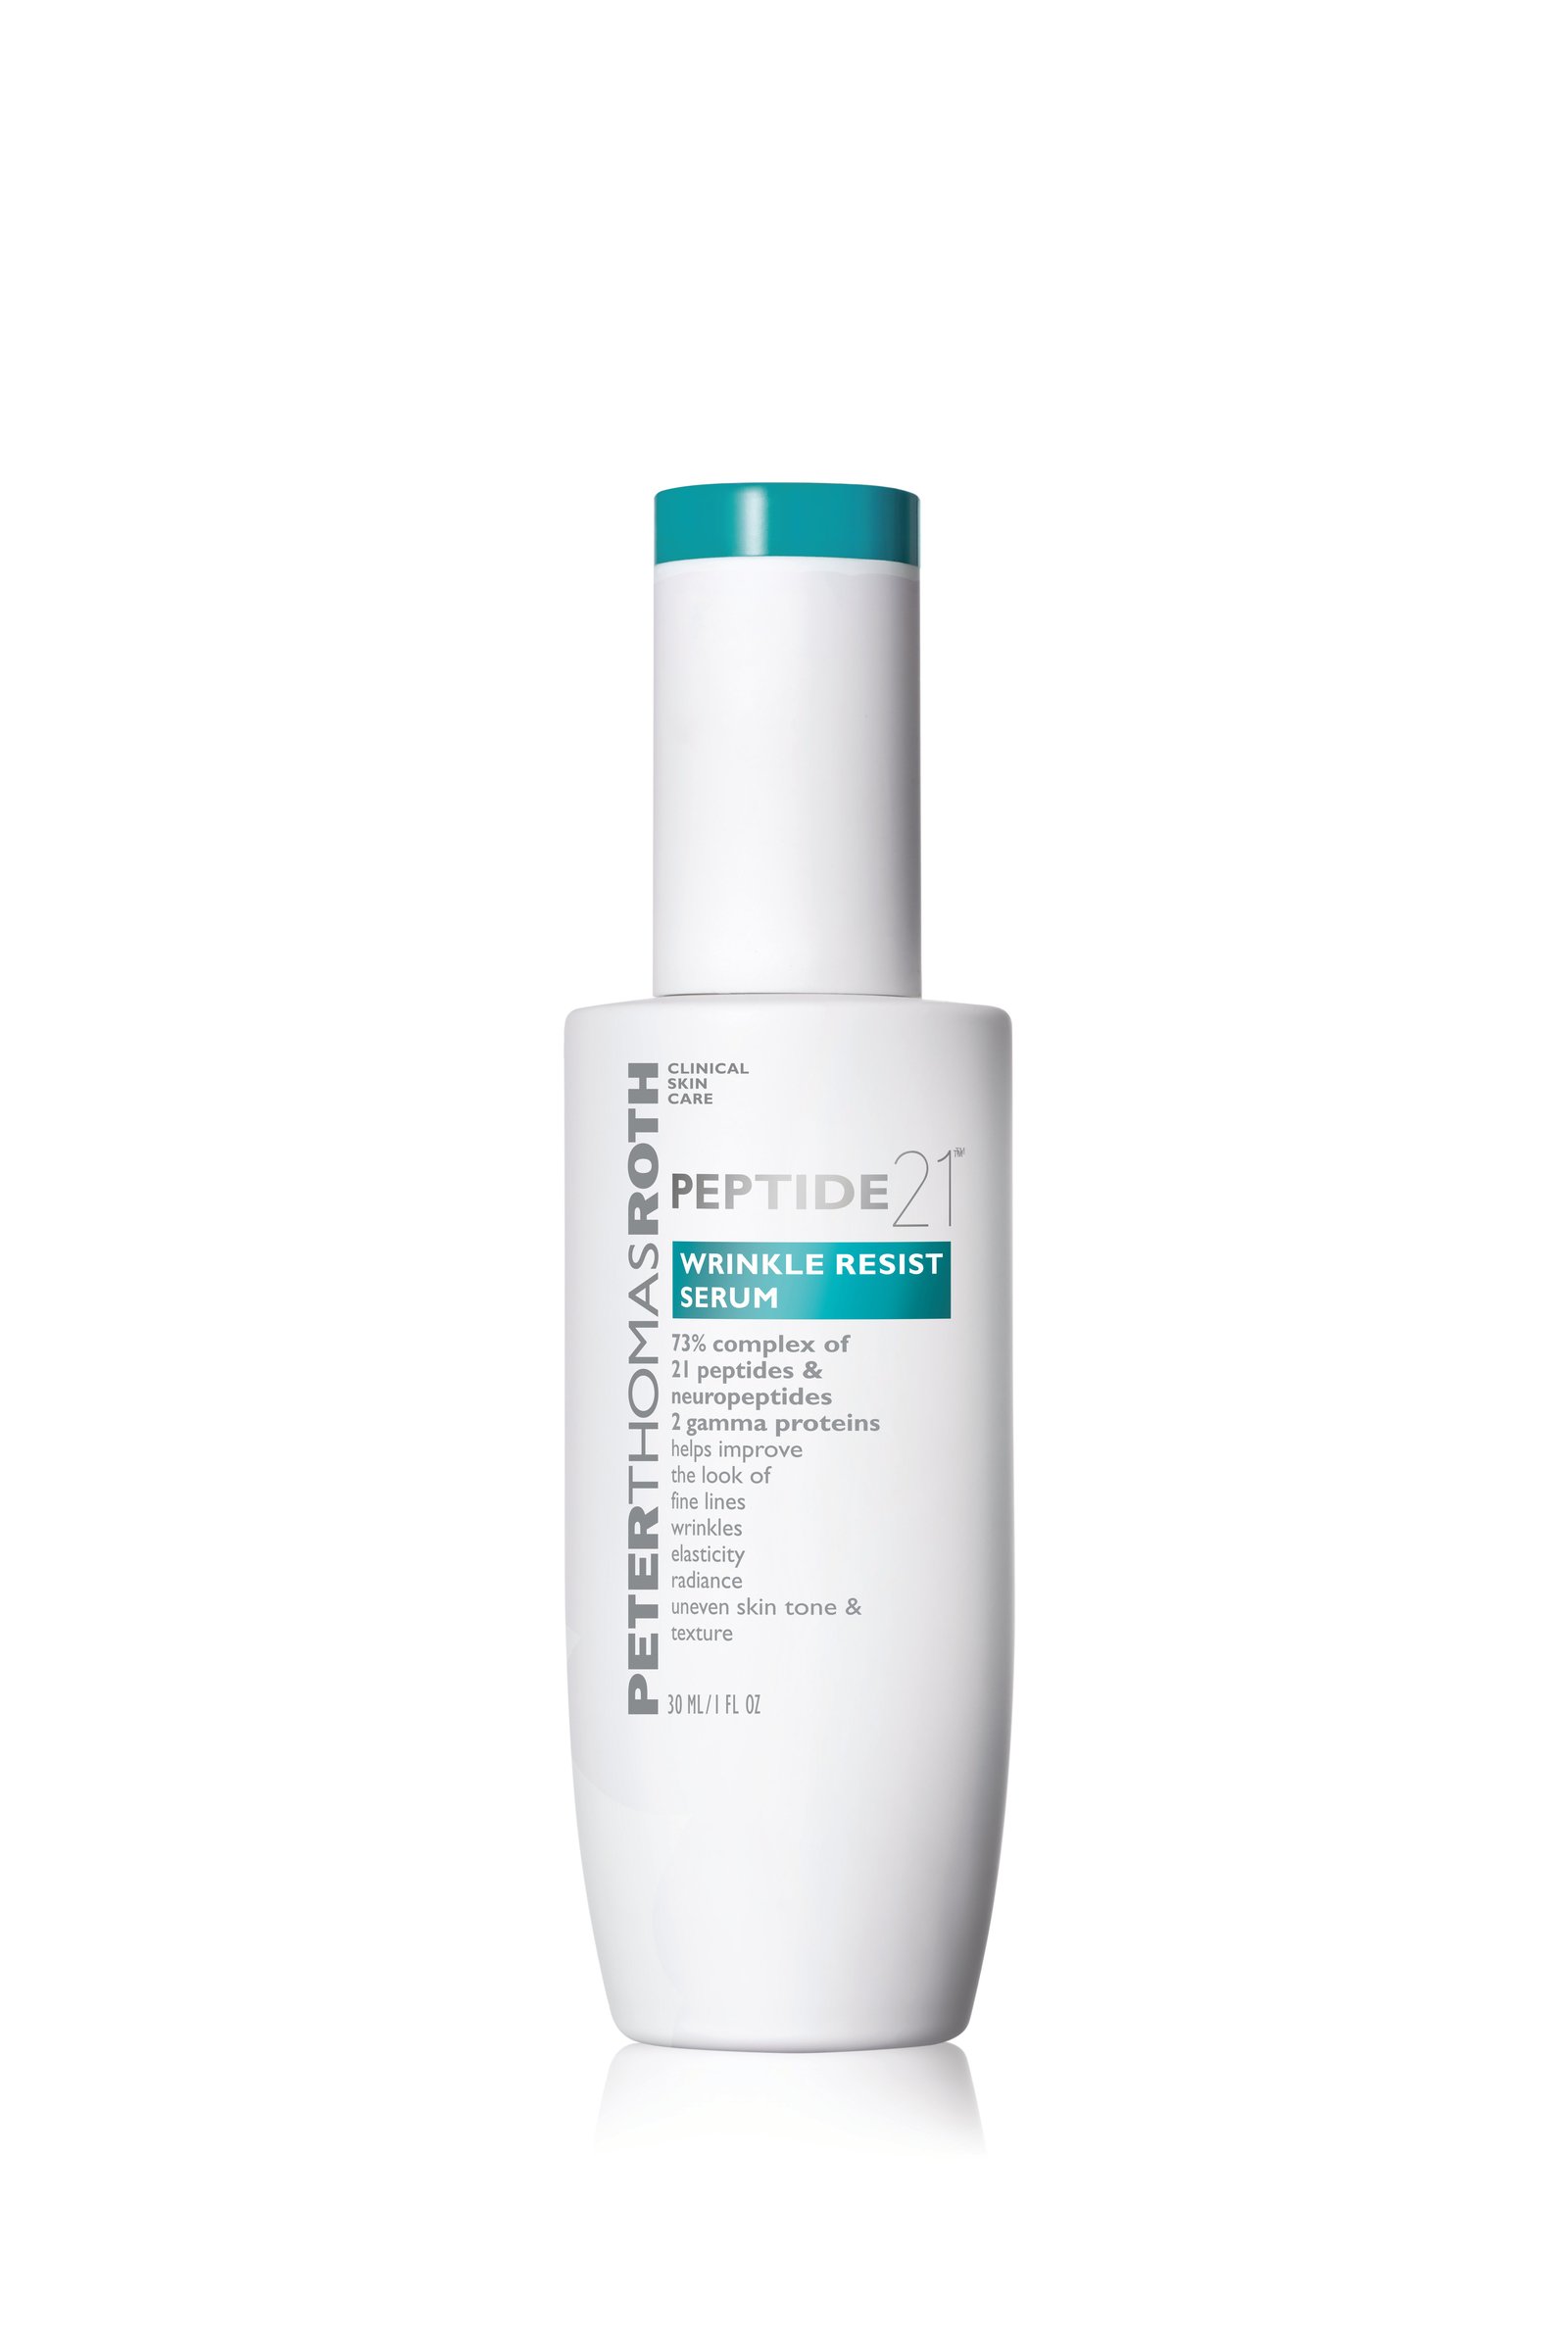 Peter Thomas Roth Peptide 21® Wrinkle Resist Serum 30ml